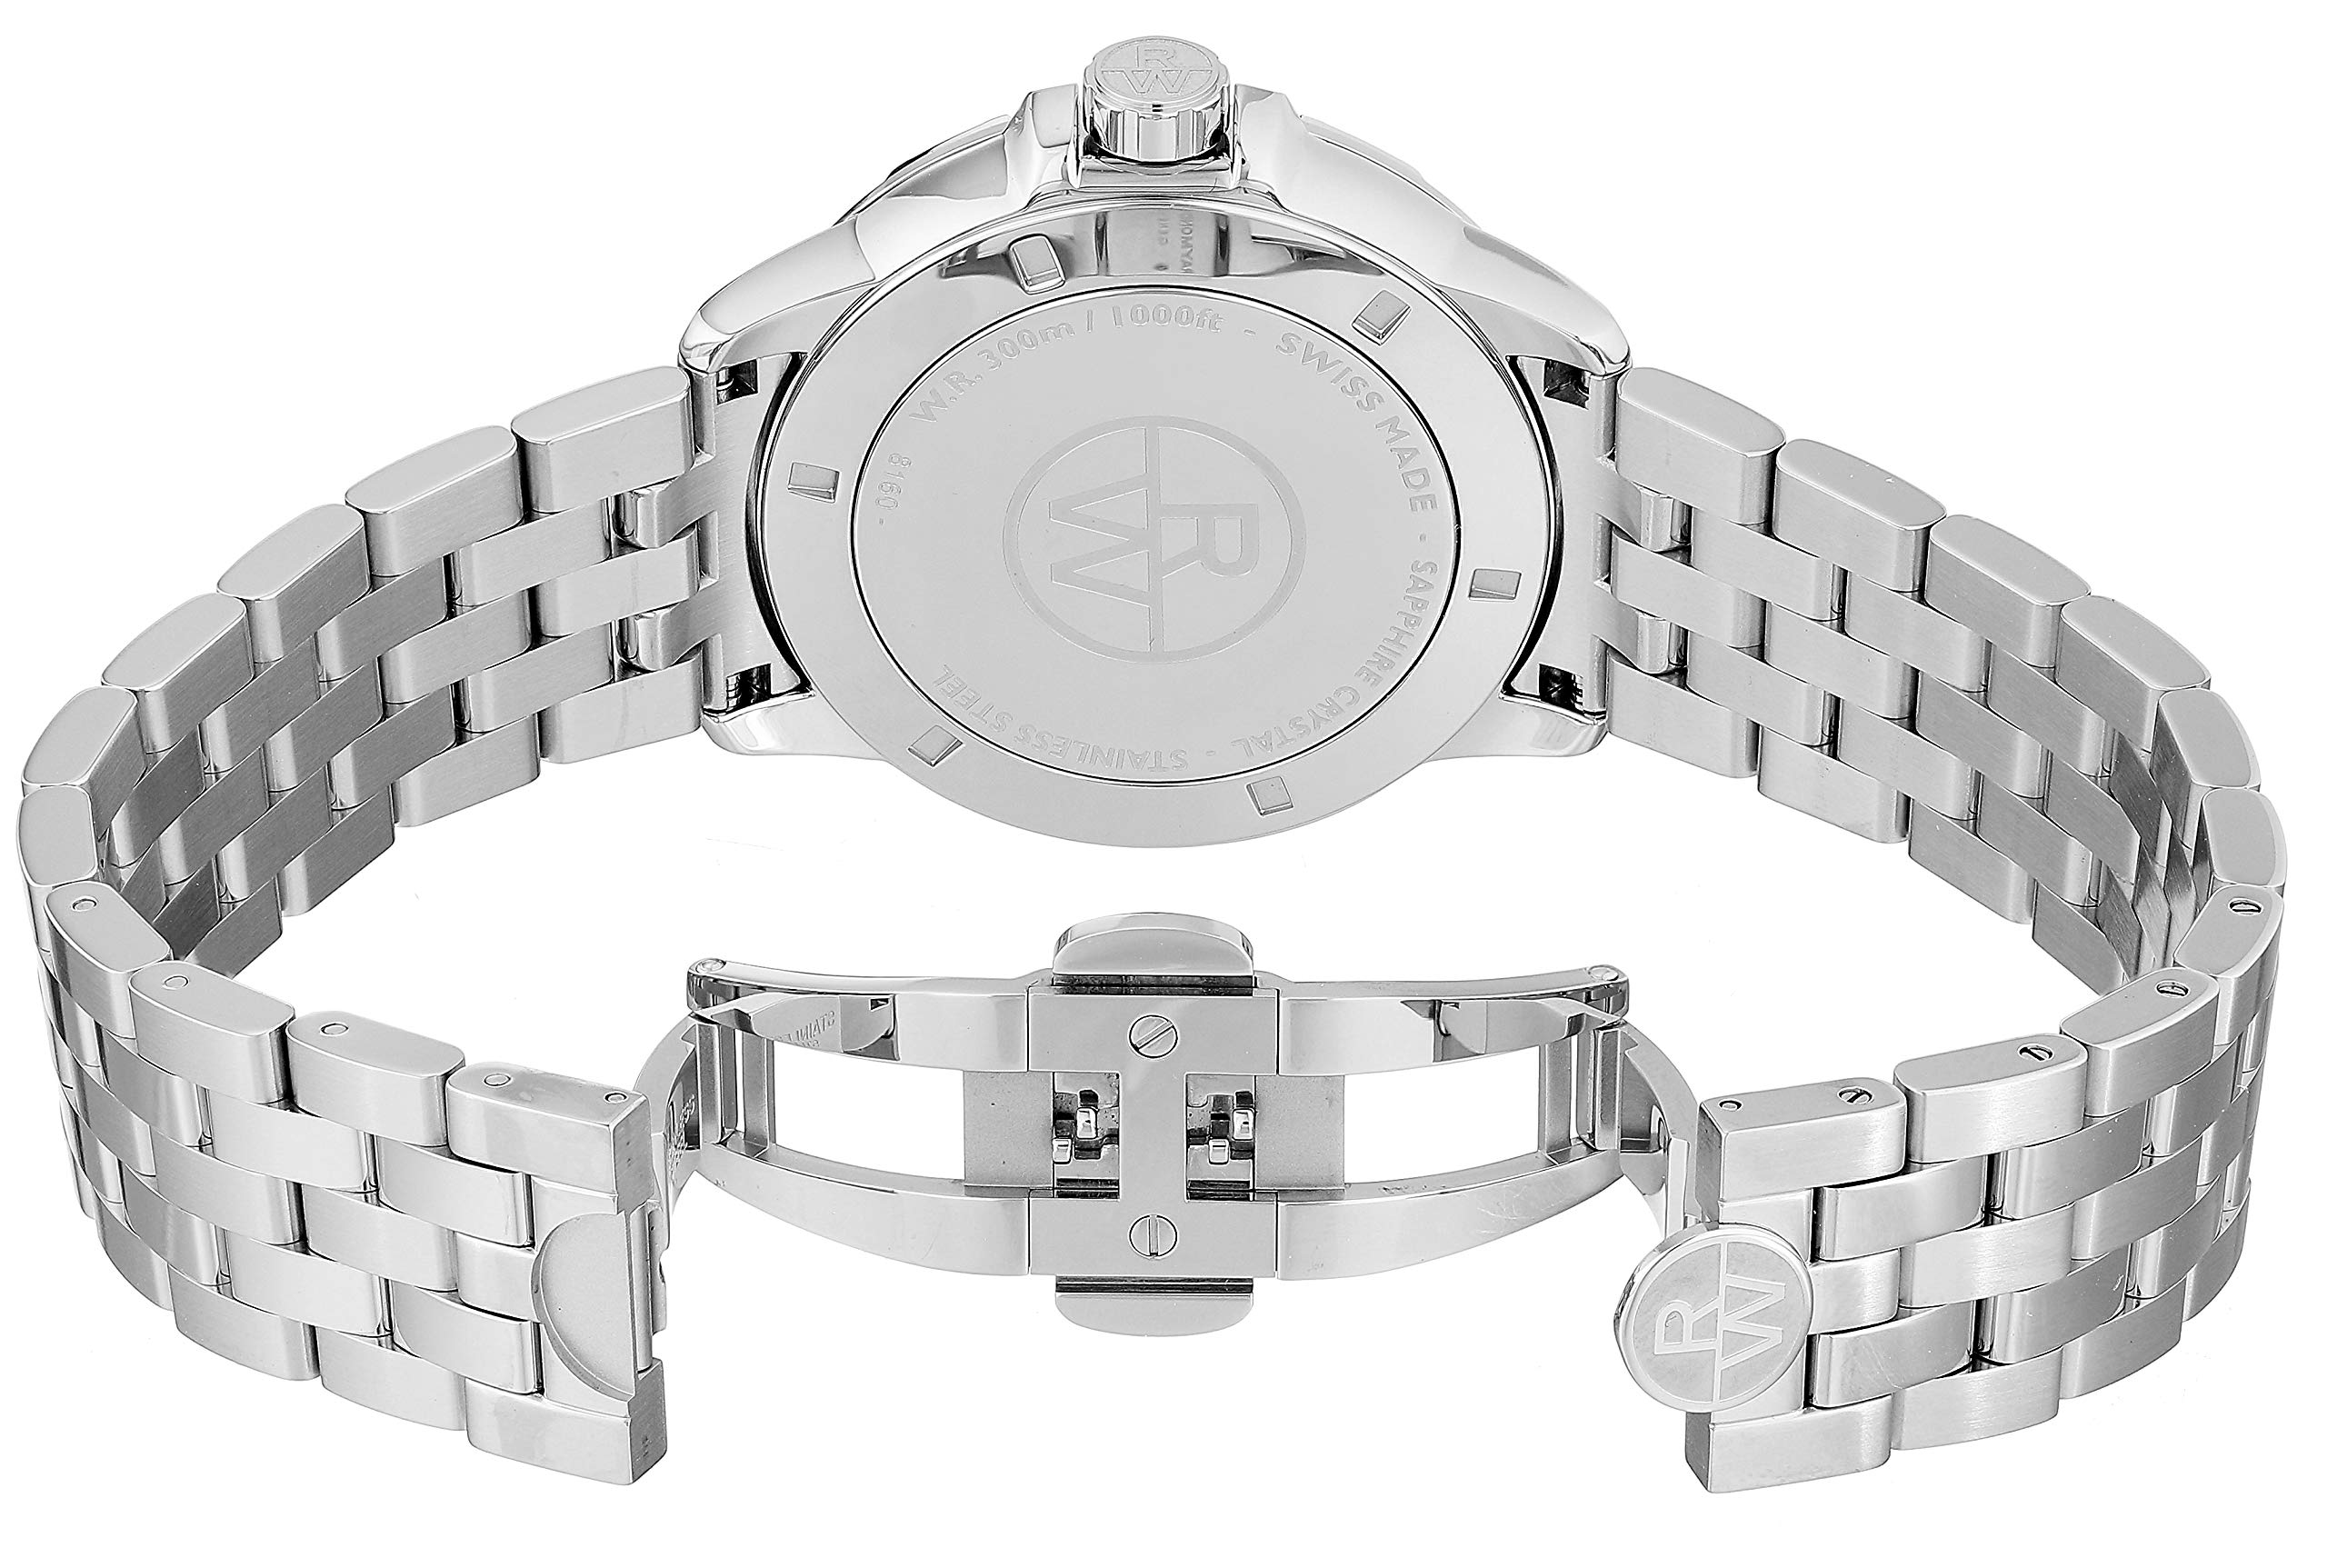 RAYMOND WEIL Tango Classic Men's Watch, Quartz, White Dial, Black Roman Numerals, Stainless Steel Bracelet, 41 mm (Model: 8160-ST-00300)